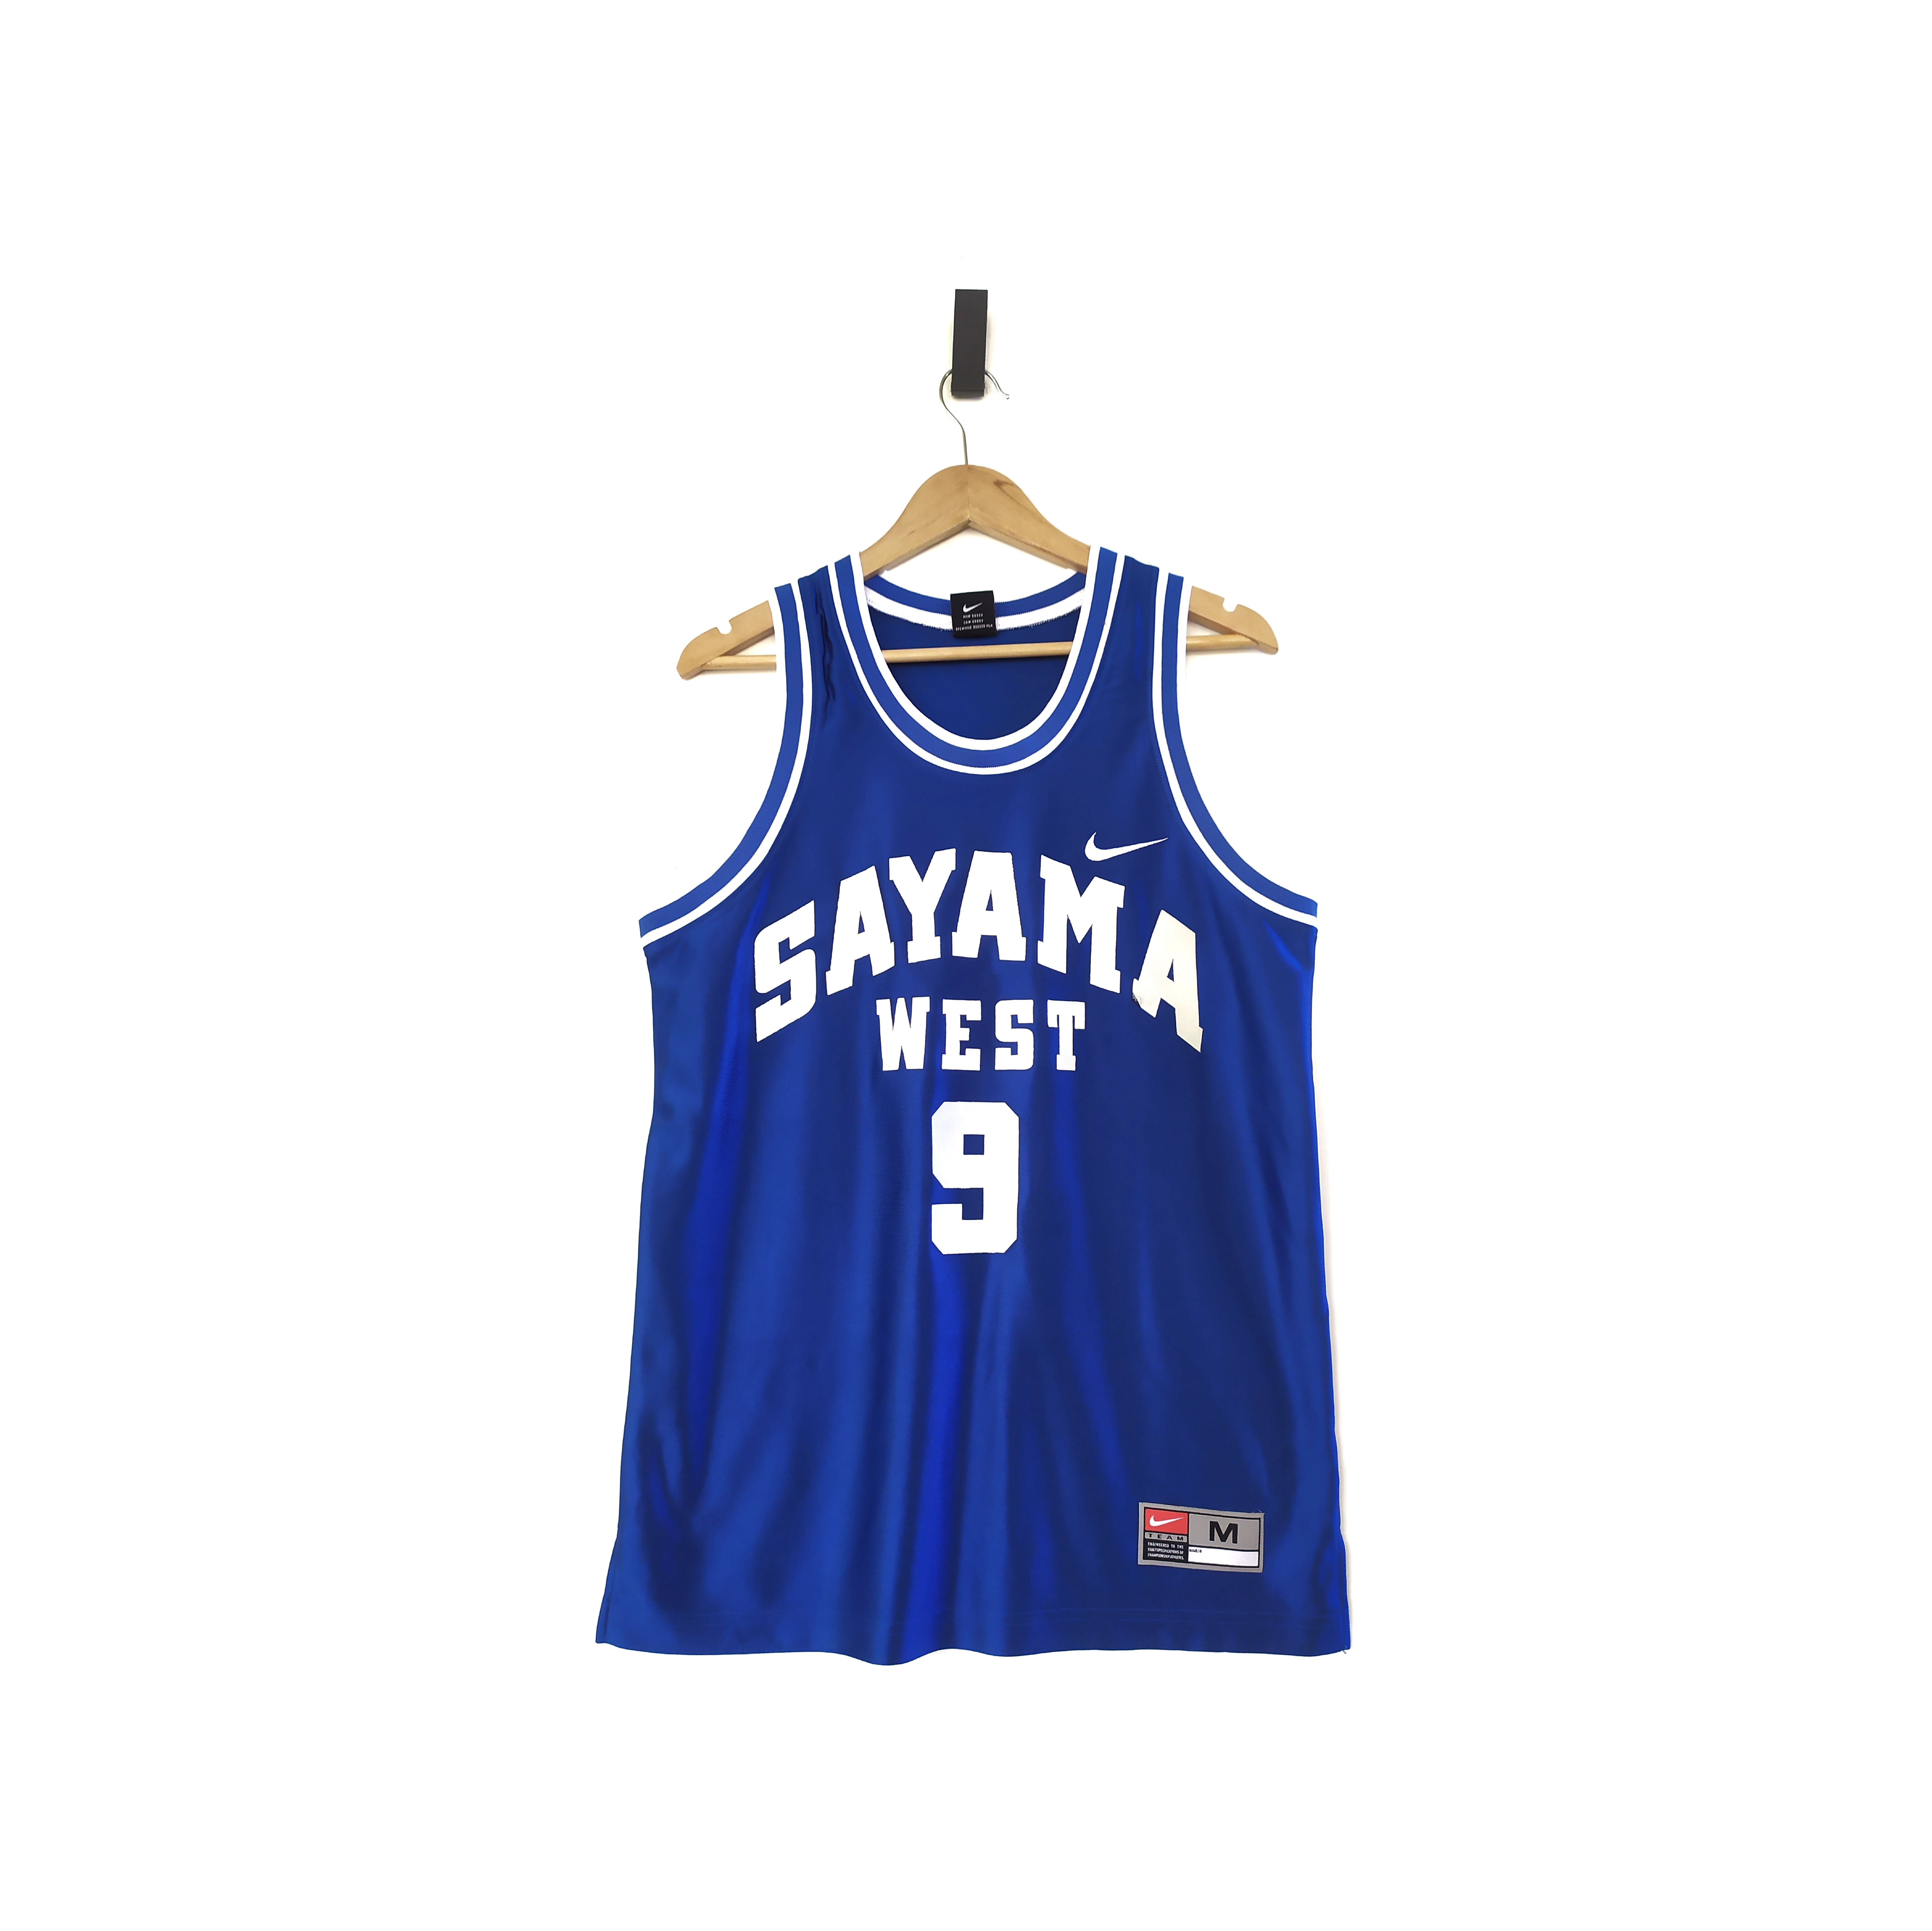 Vintage 90s Nike Basketball Sayama West Jersey - 1